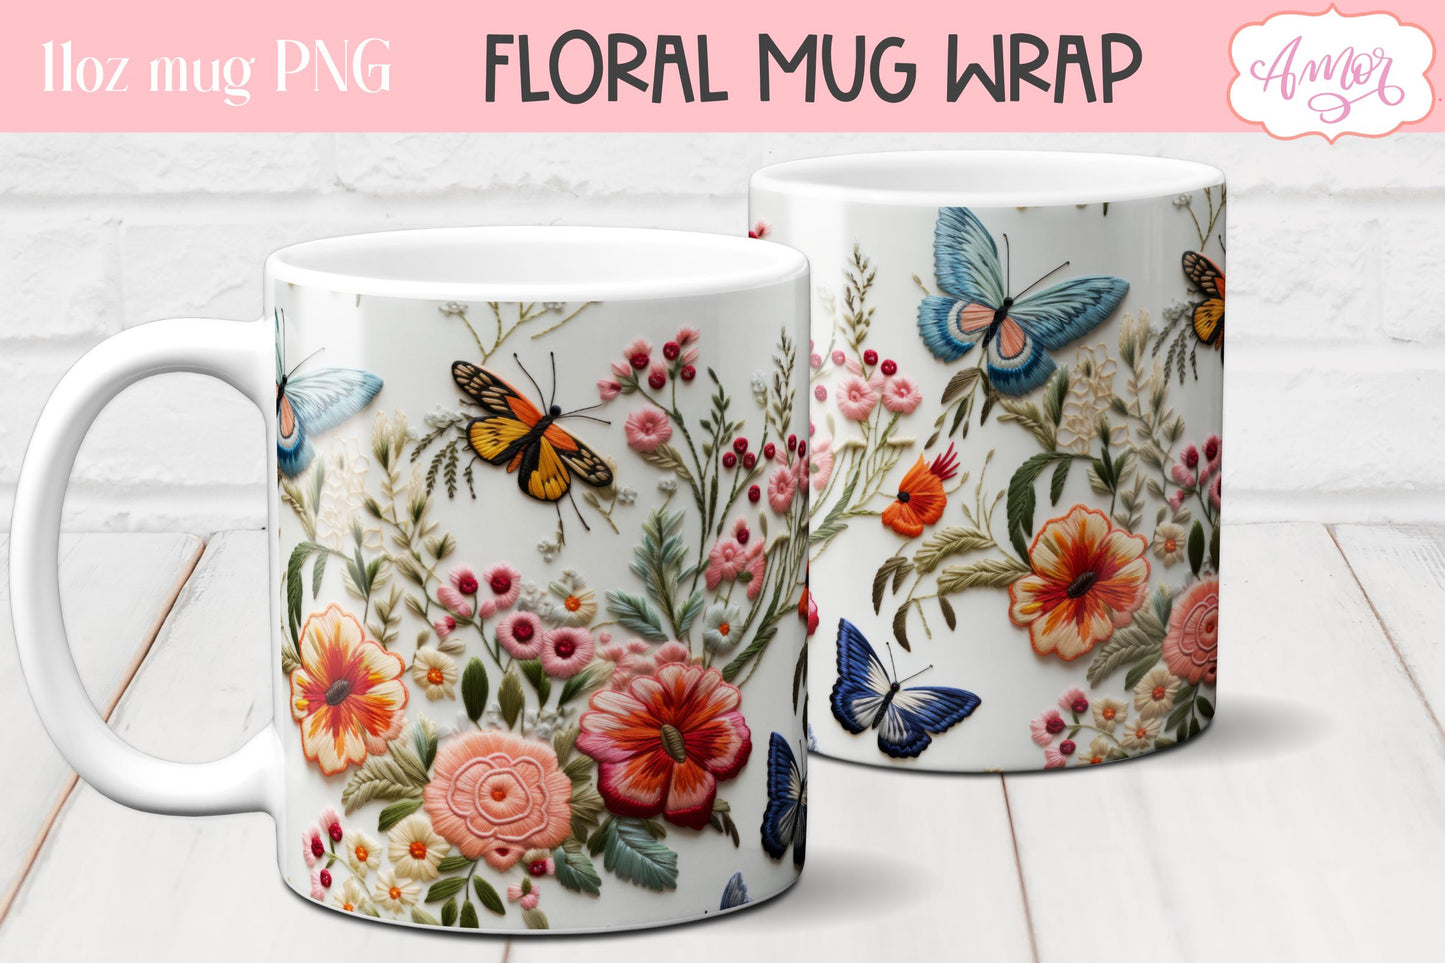 3D embroidery flowers mug wrap design sublimation